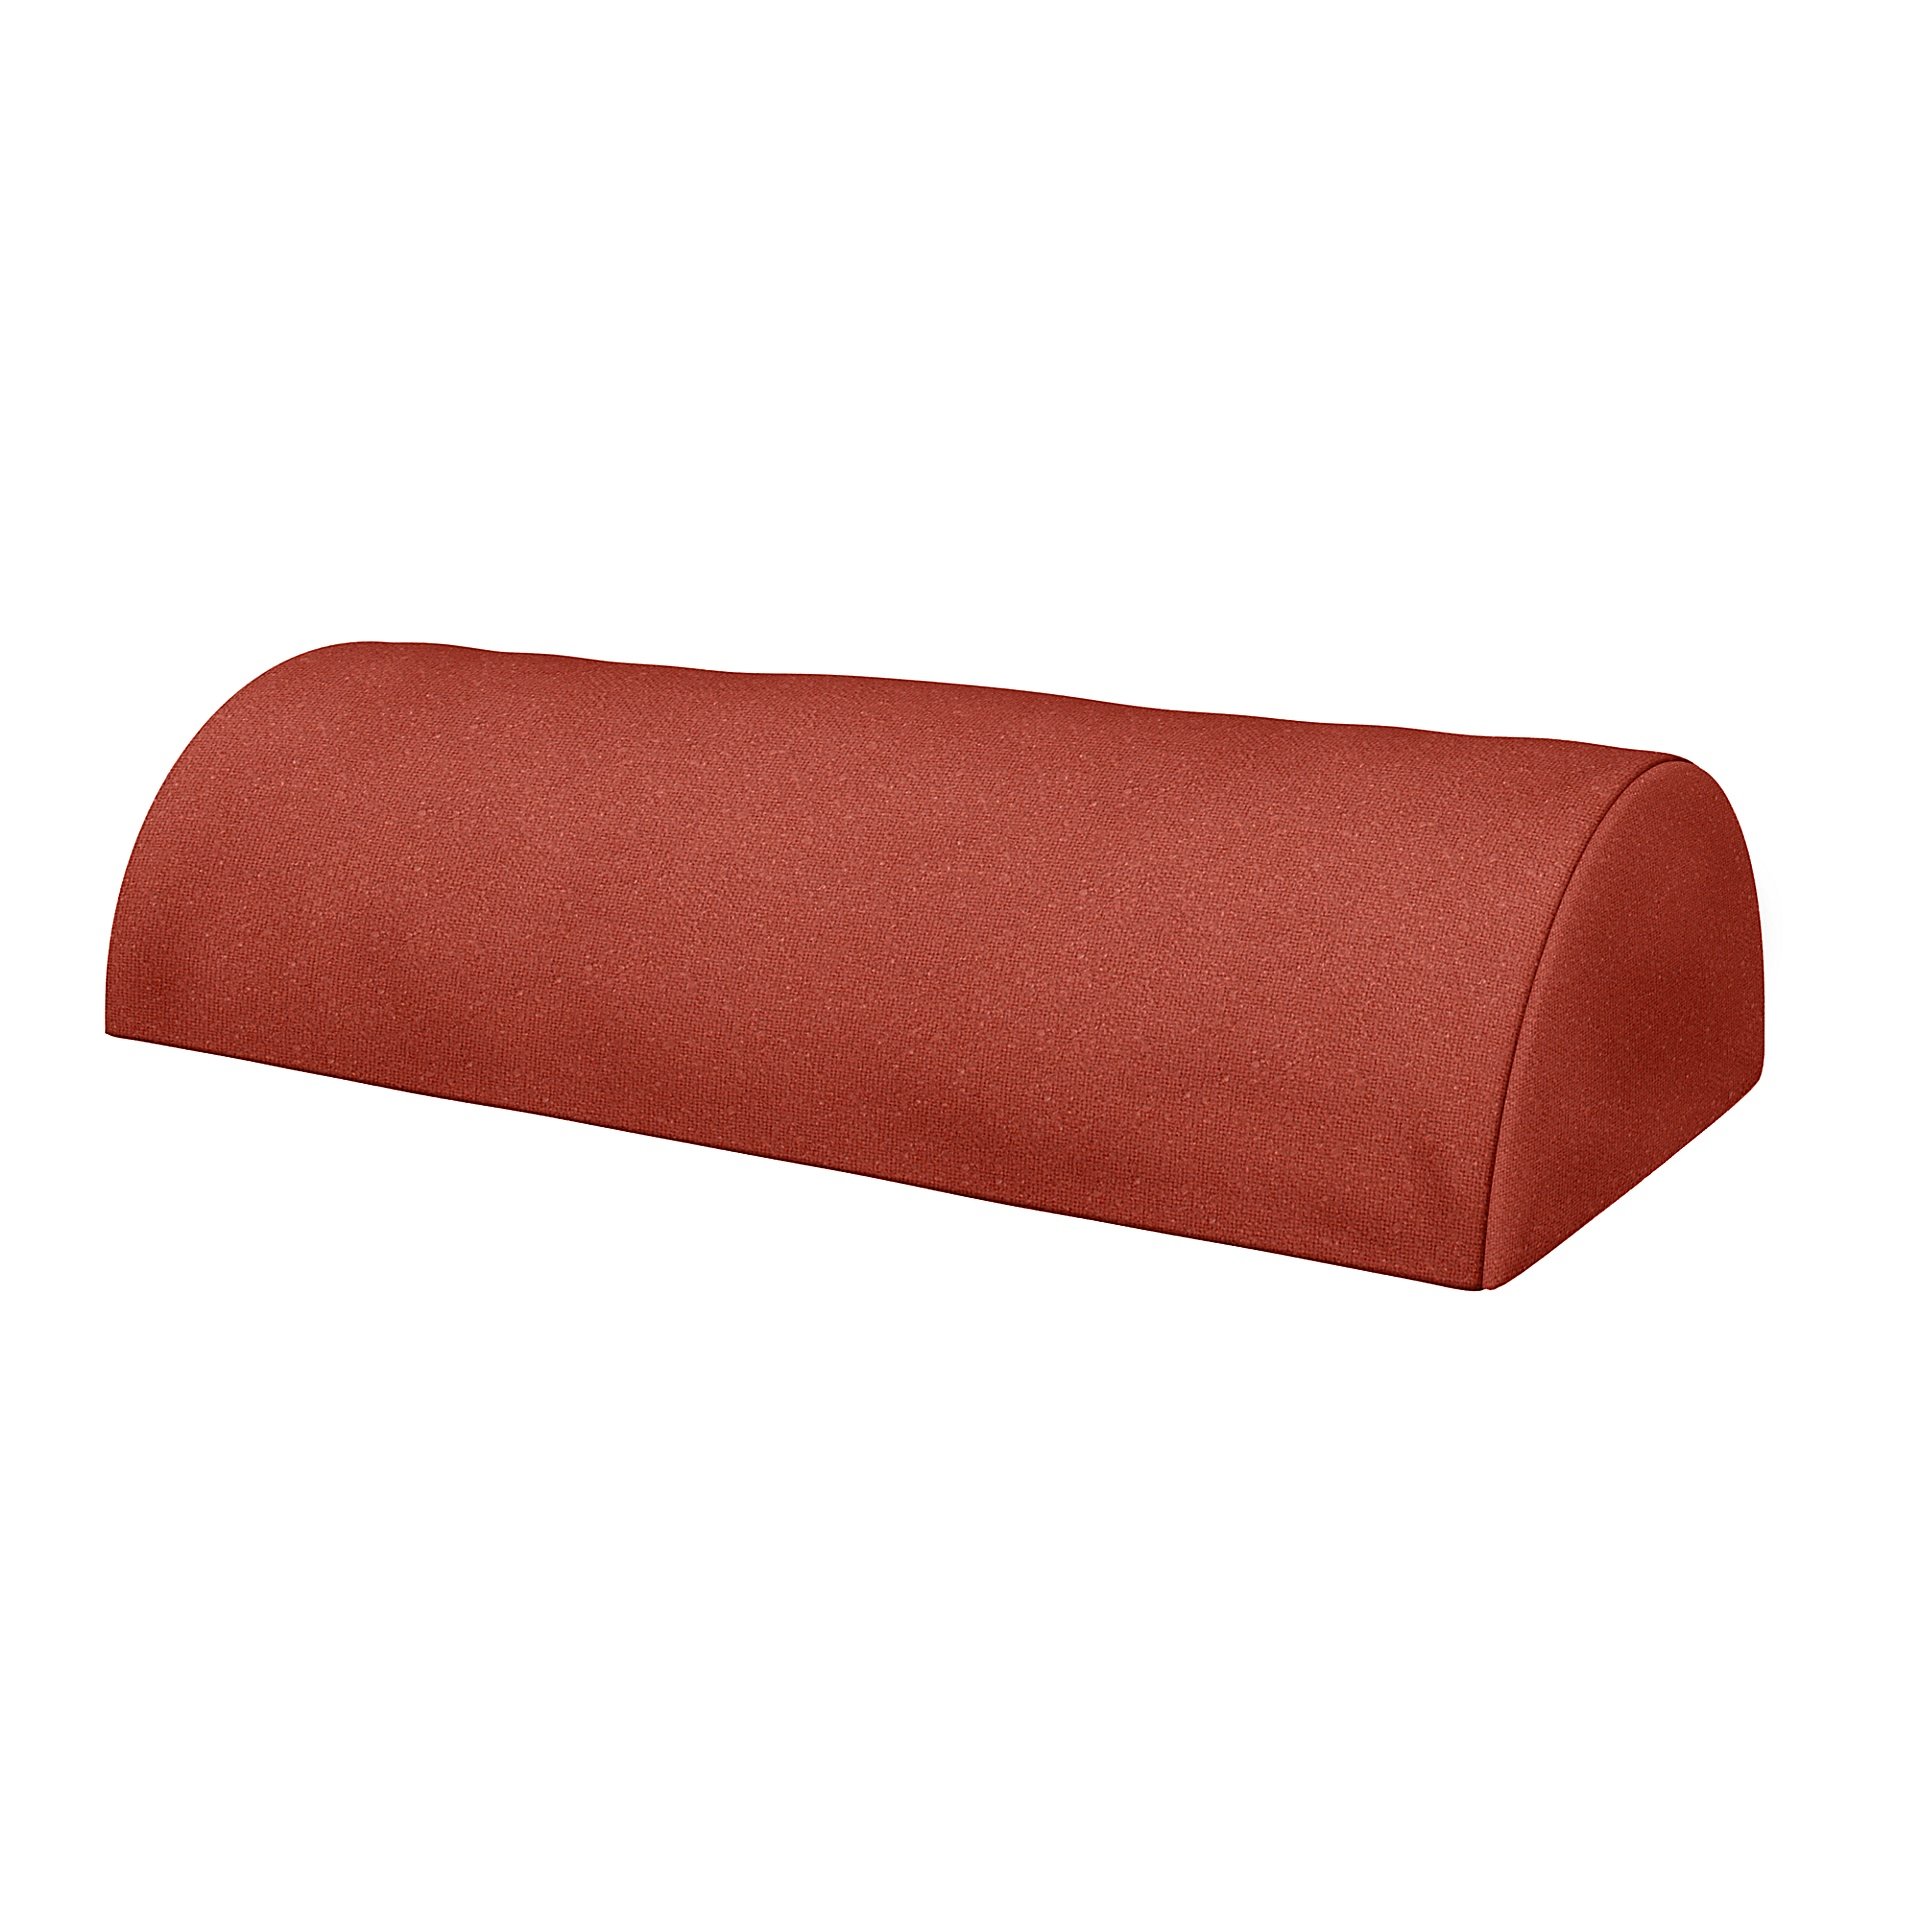 IKEA - Cushion Cover Beddinge Half Moon , Coral Red, Outdoor - Bemz